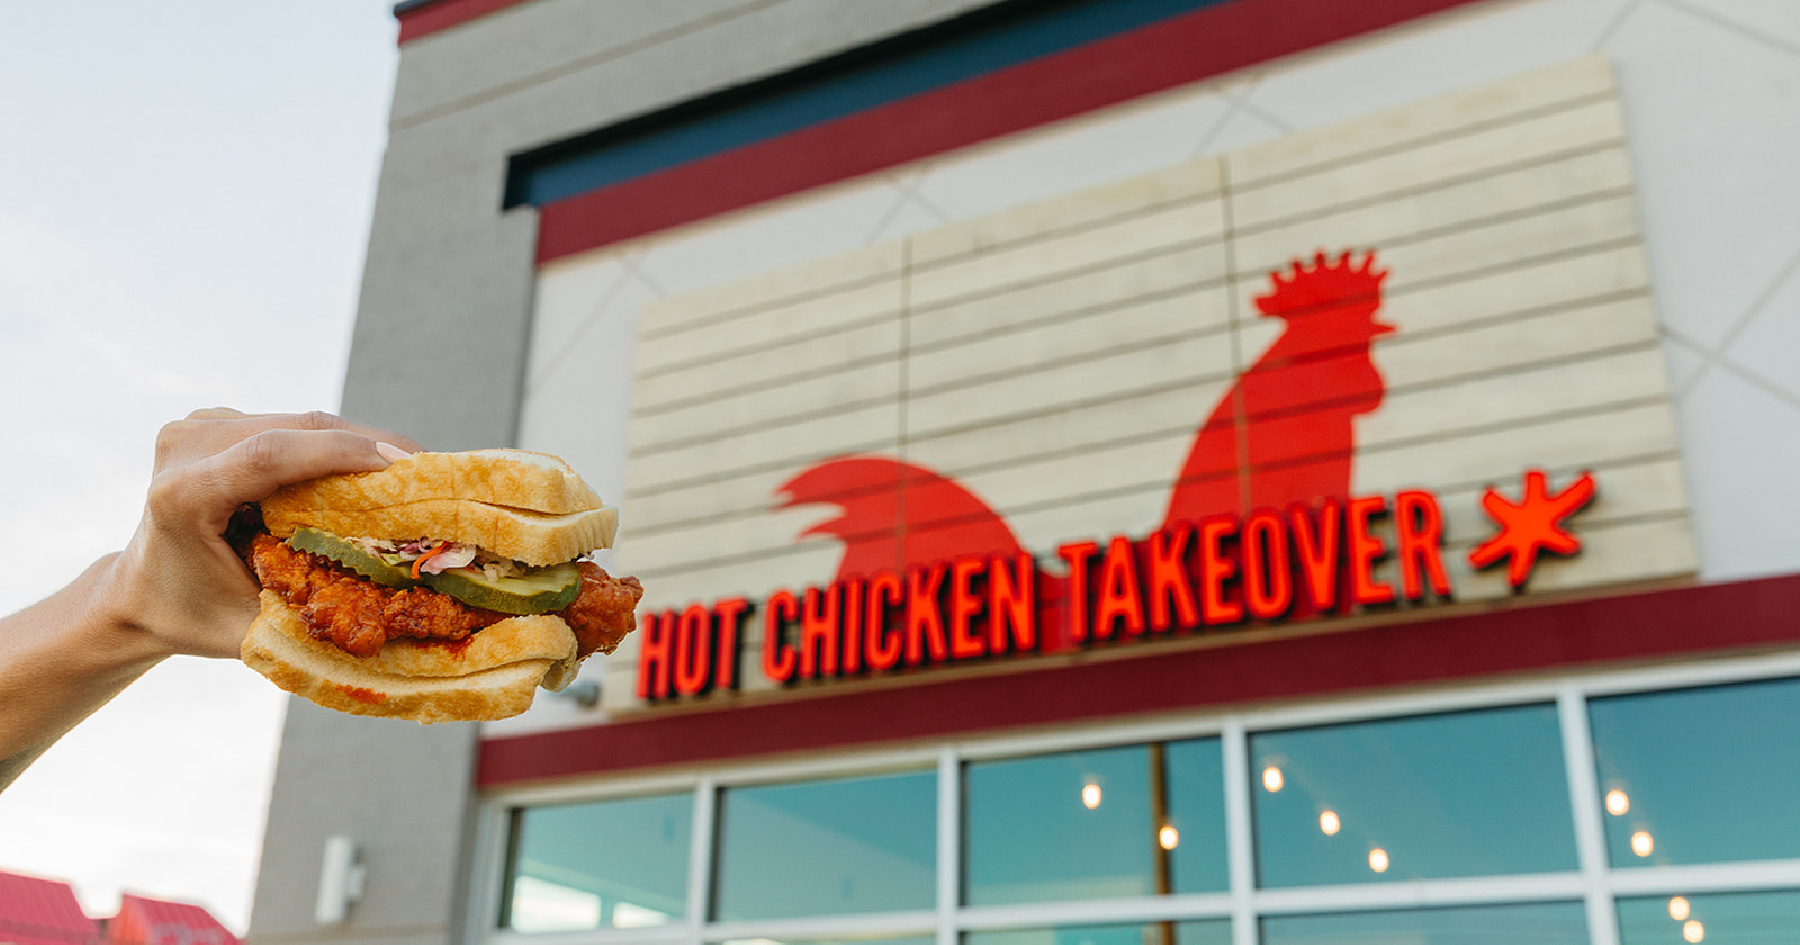 Hot Chicken Takeover Ohio